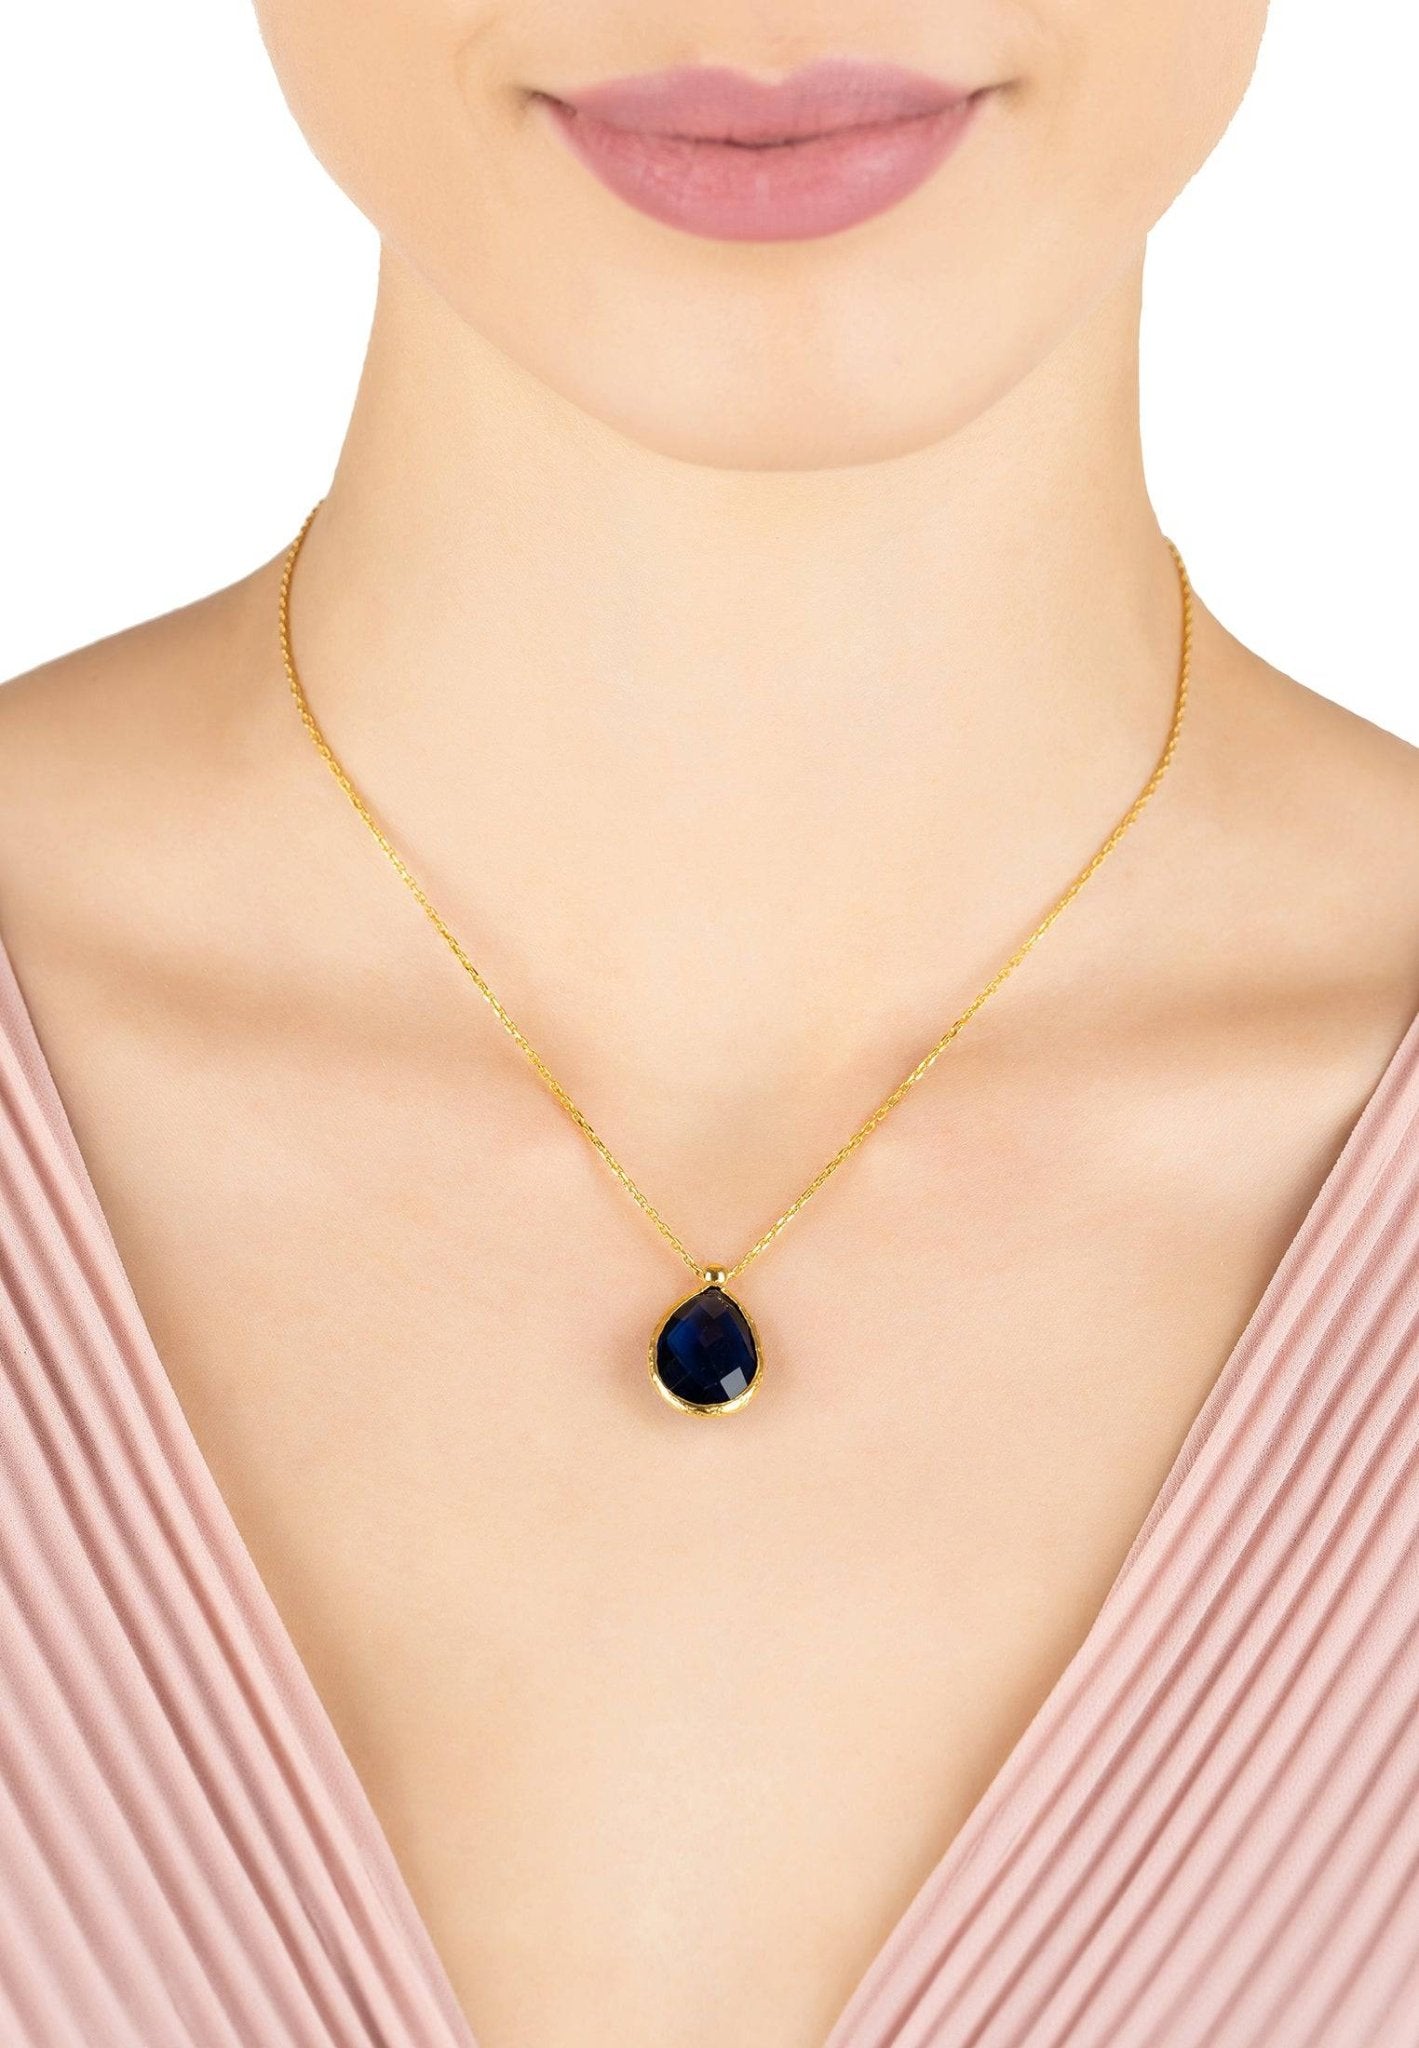 Petite Drop Necklace Gold Sapphire Hydro - LATELITA Necklaces